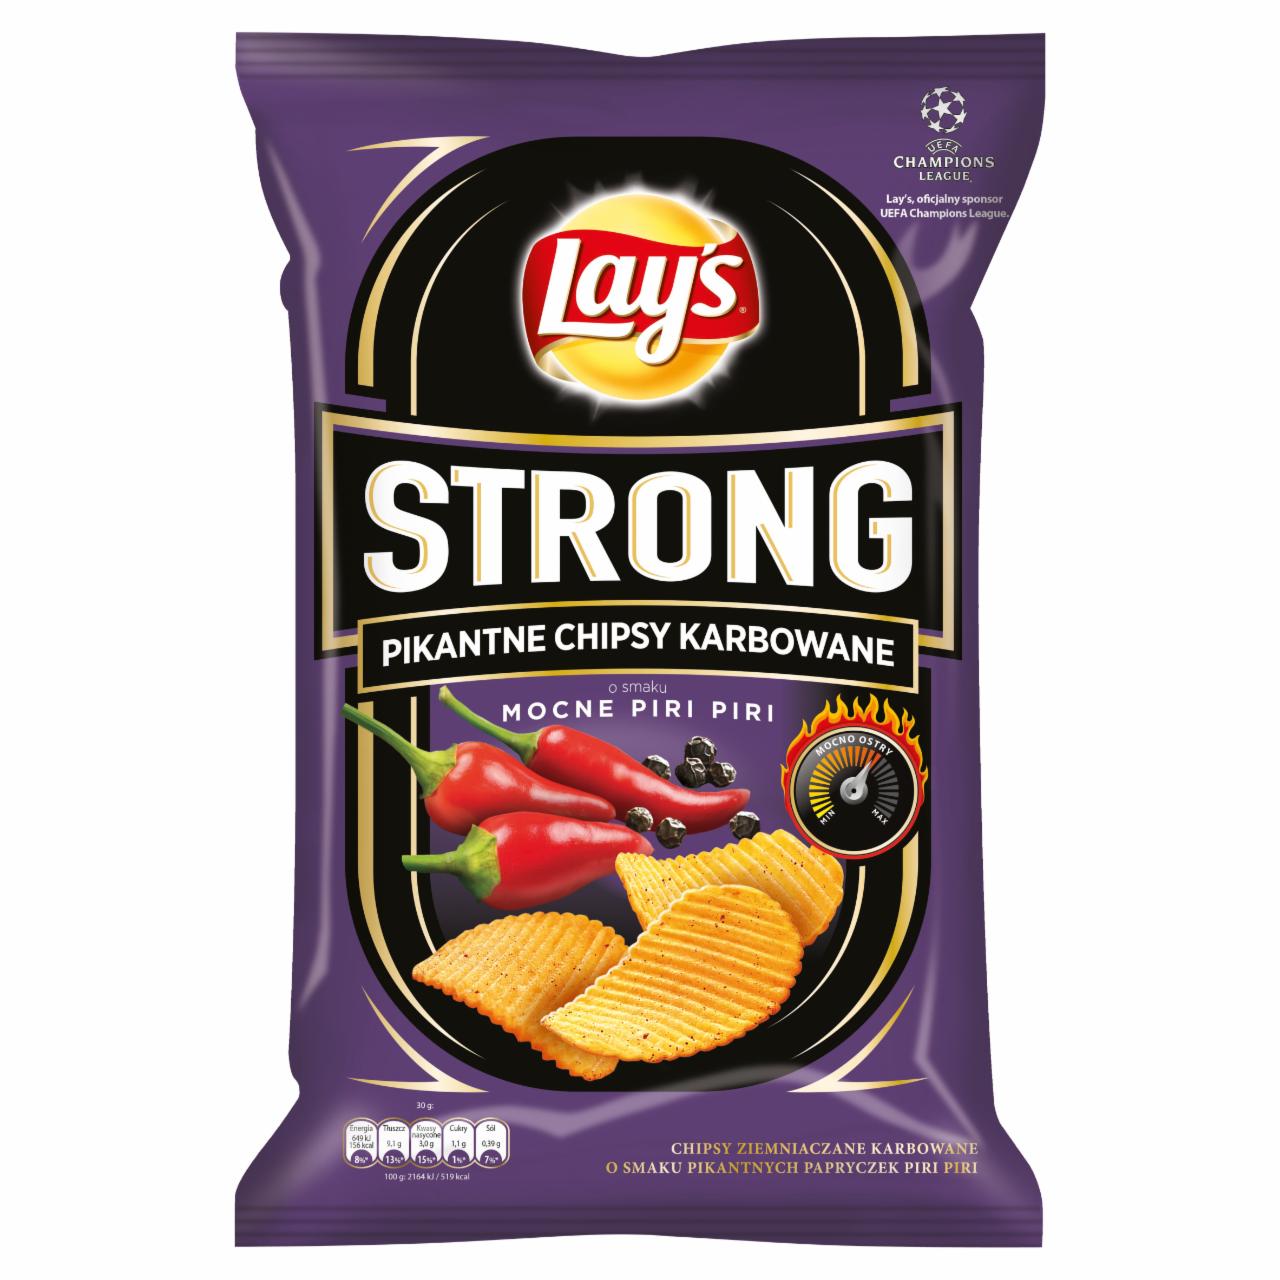 Zdjęcia - Lay's Strong Pikantne chipsy karbowane o smaku mocne piri piri 140 g